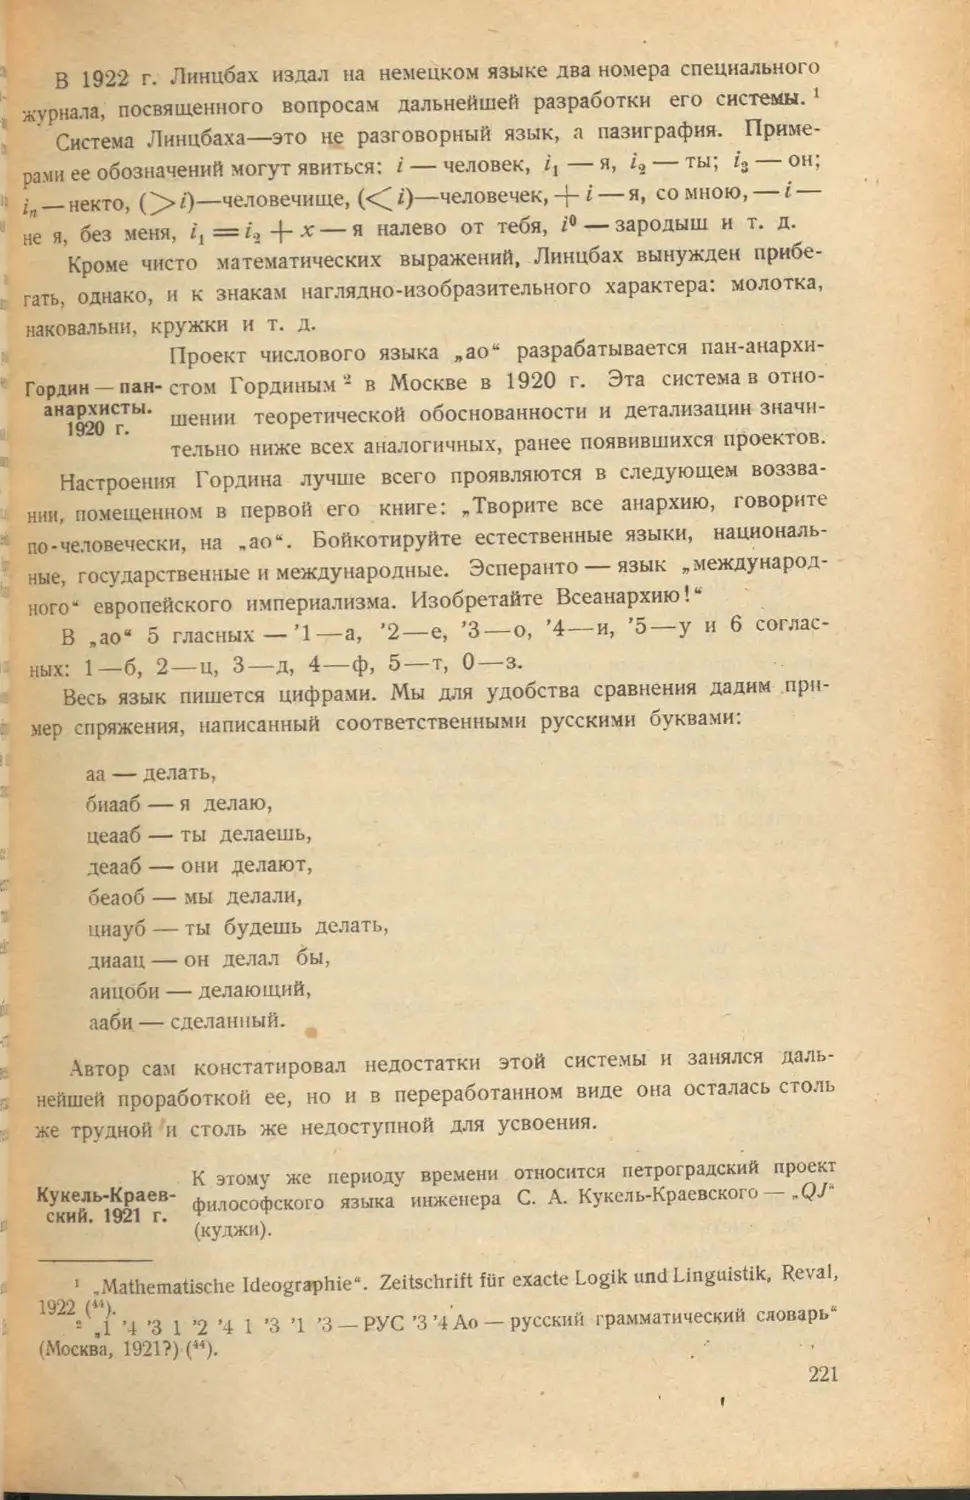 Гордин - пананархисты
Кукель-Краевский. 1921